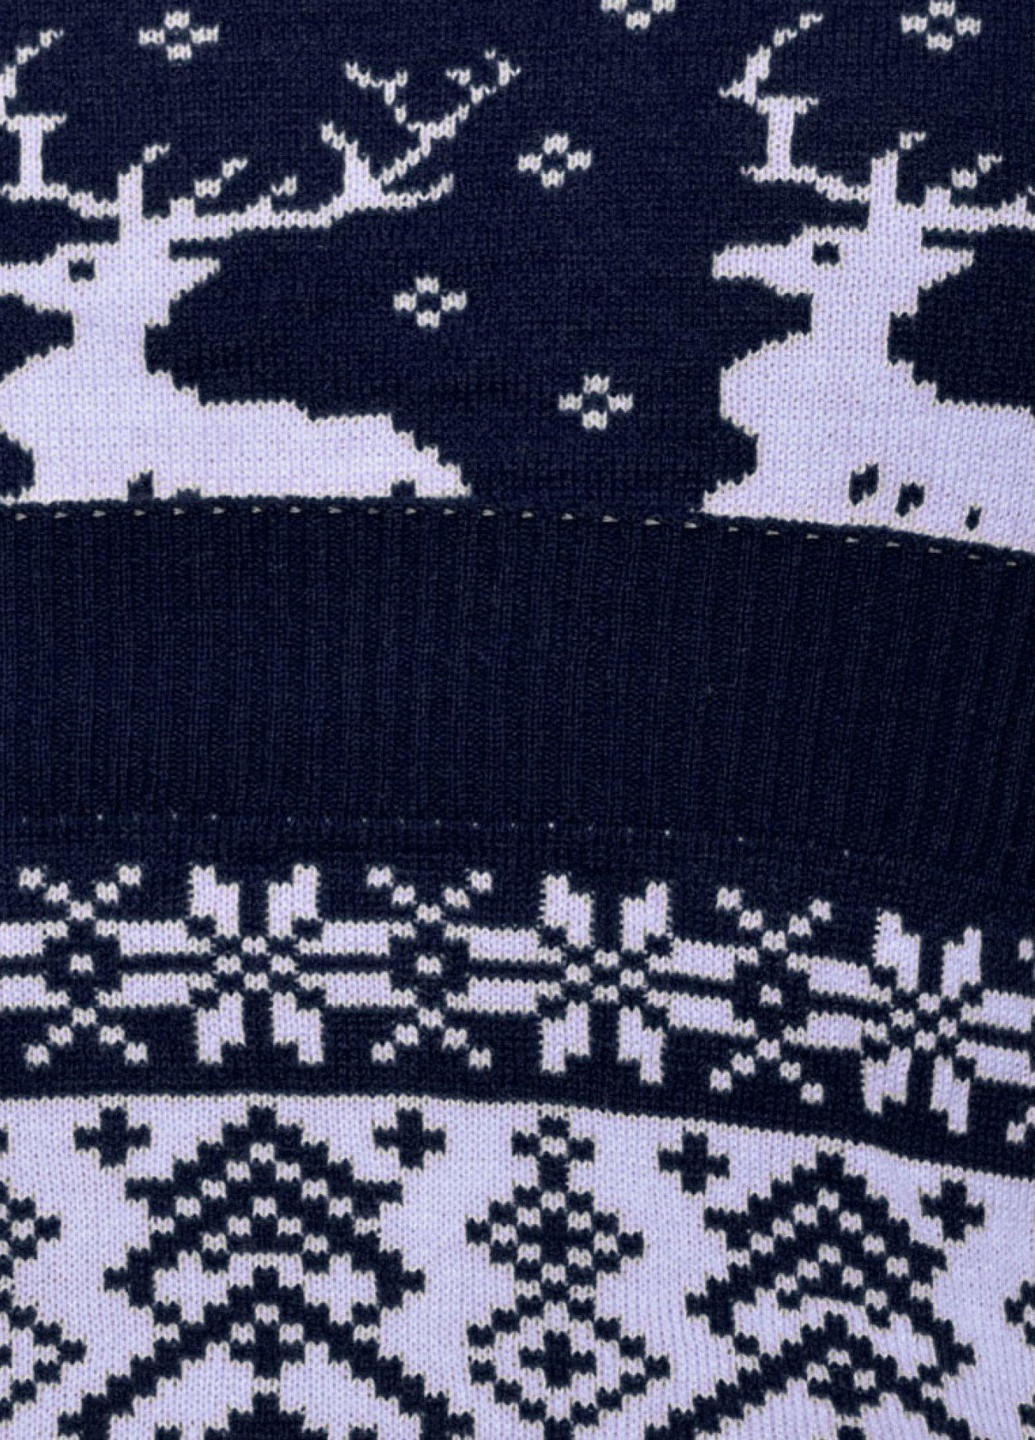 Синій светри светр з оленями (9008411)18849-686 Lemanta